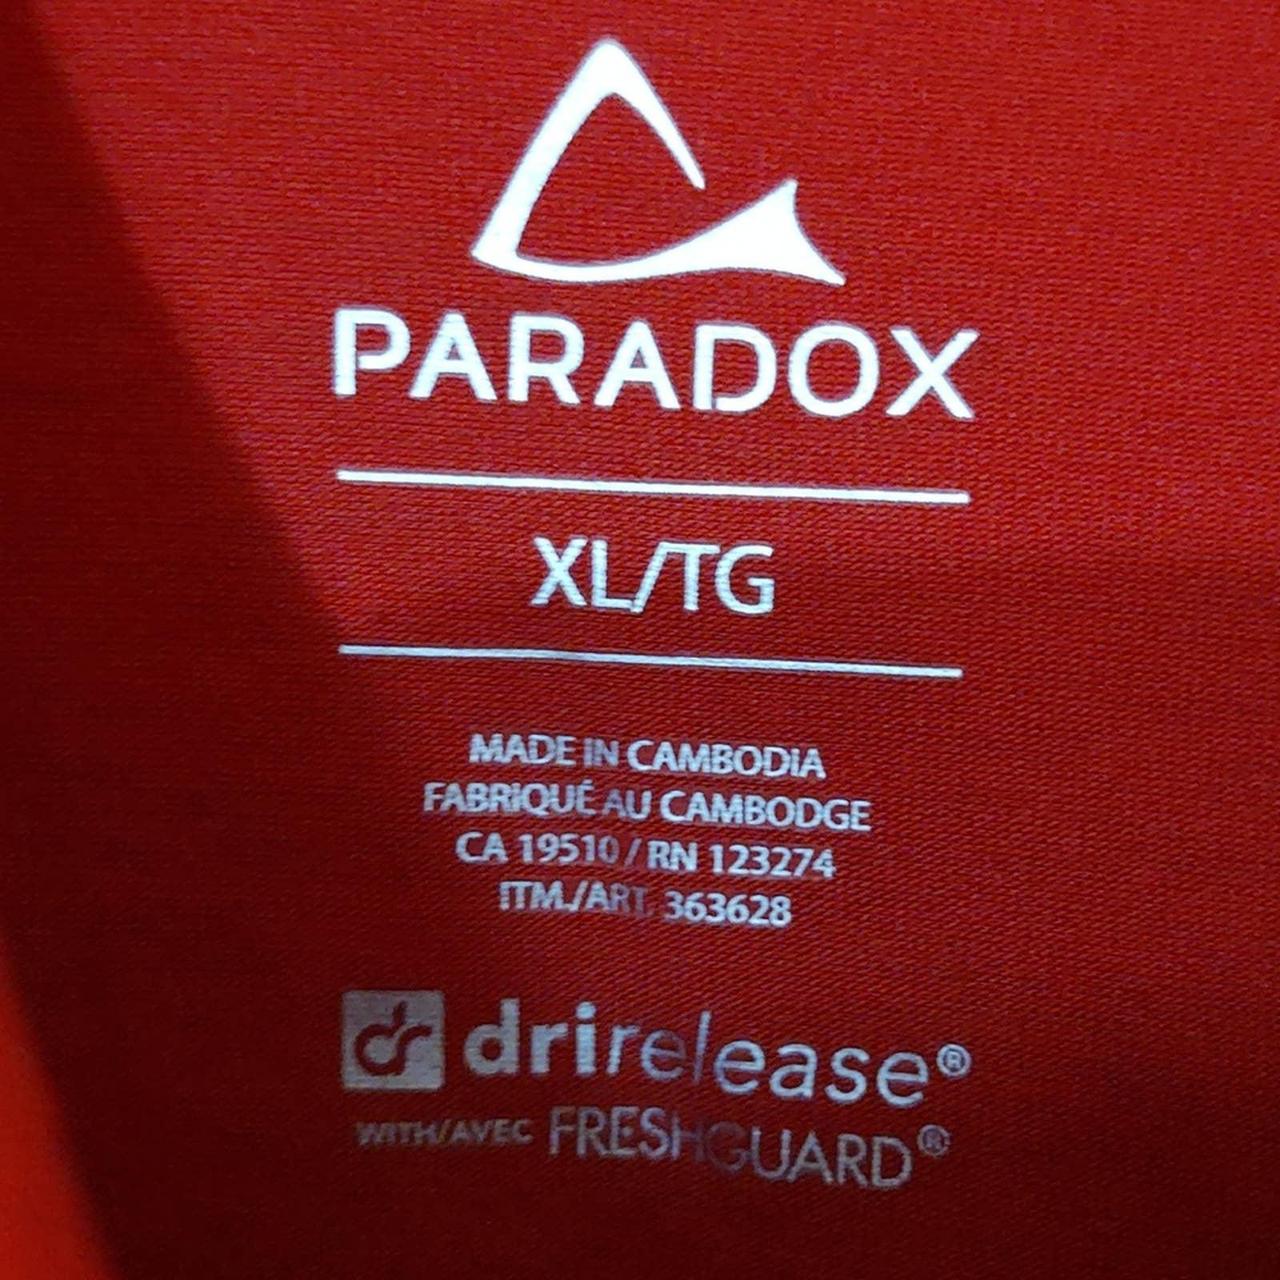 Paradox drirelease fresh guard quarter zip long - Depop